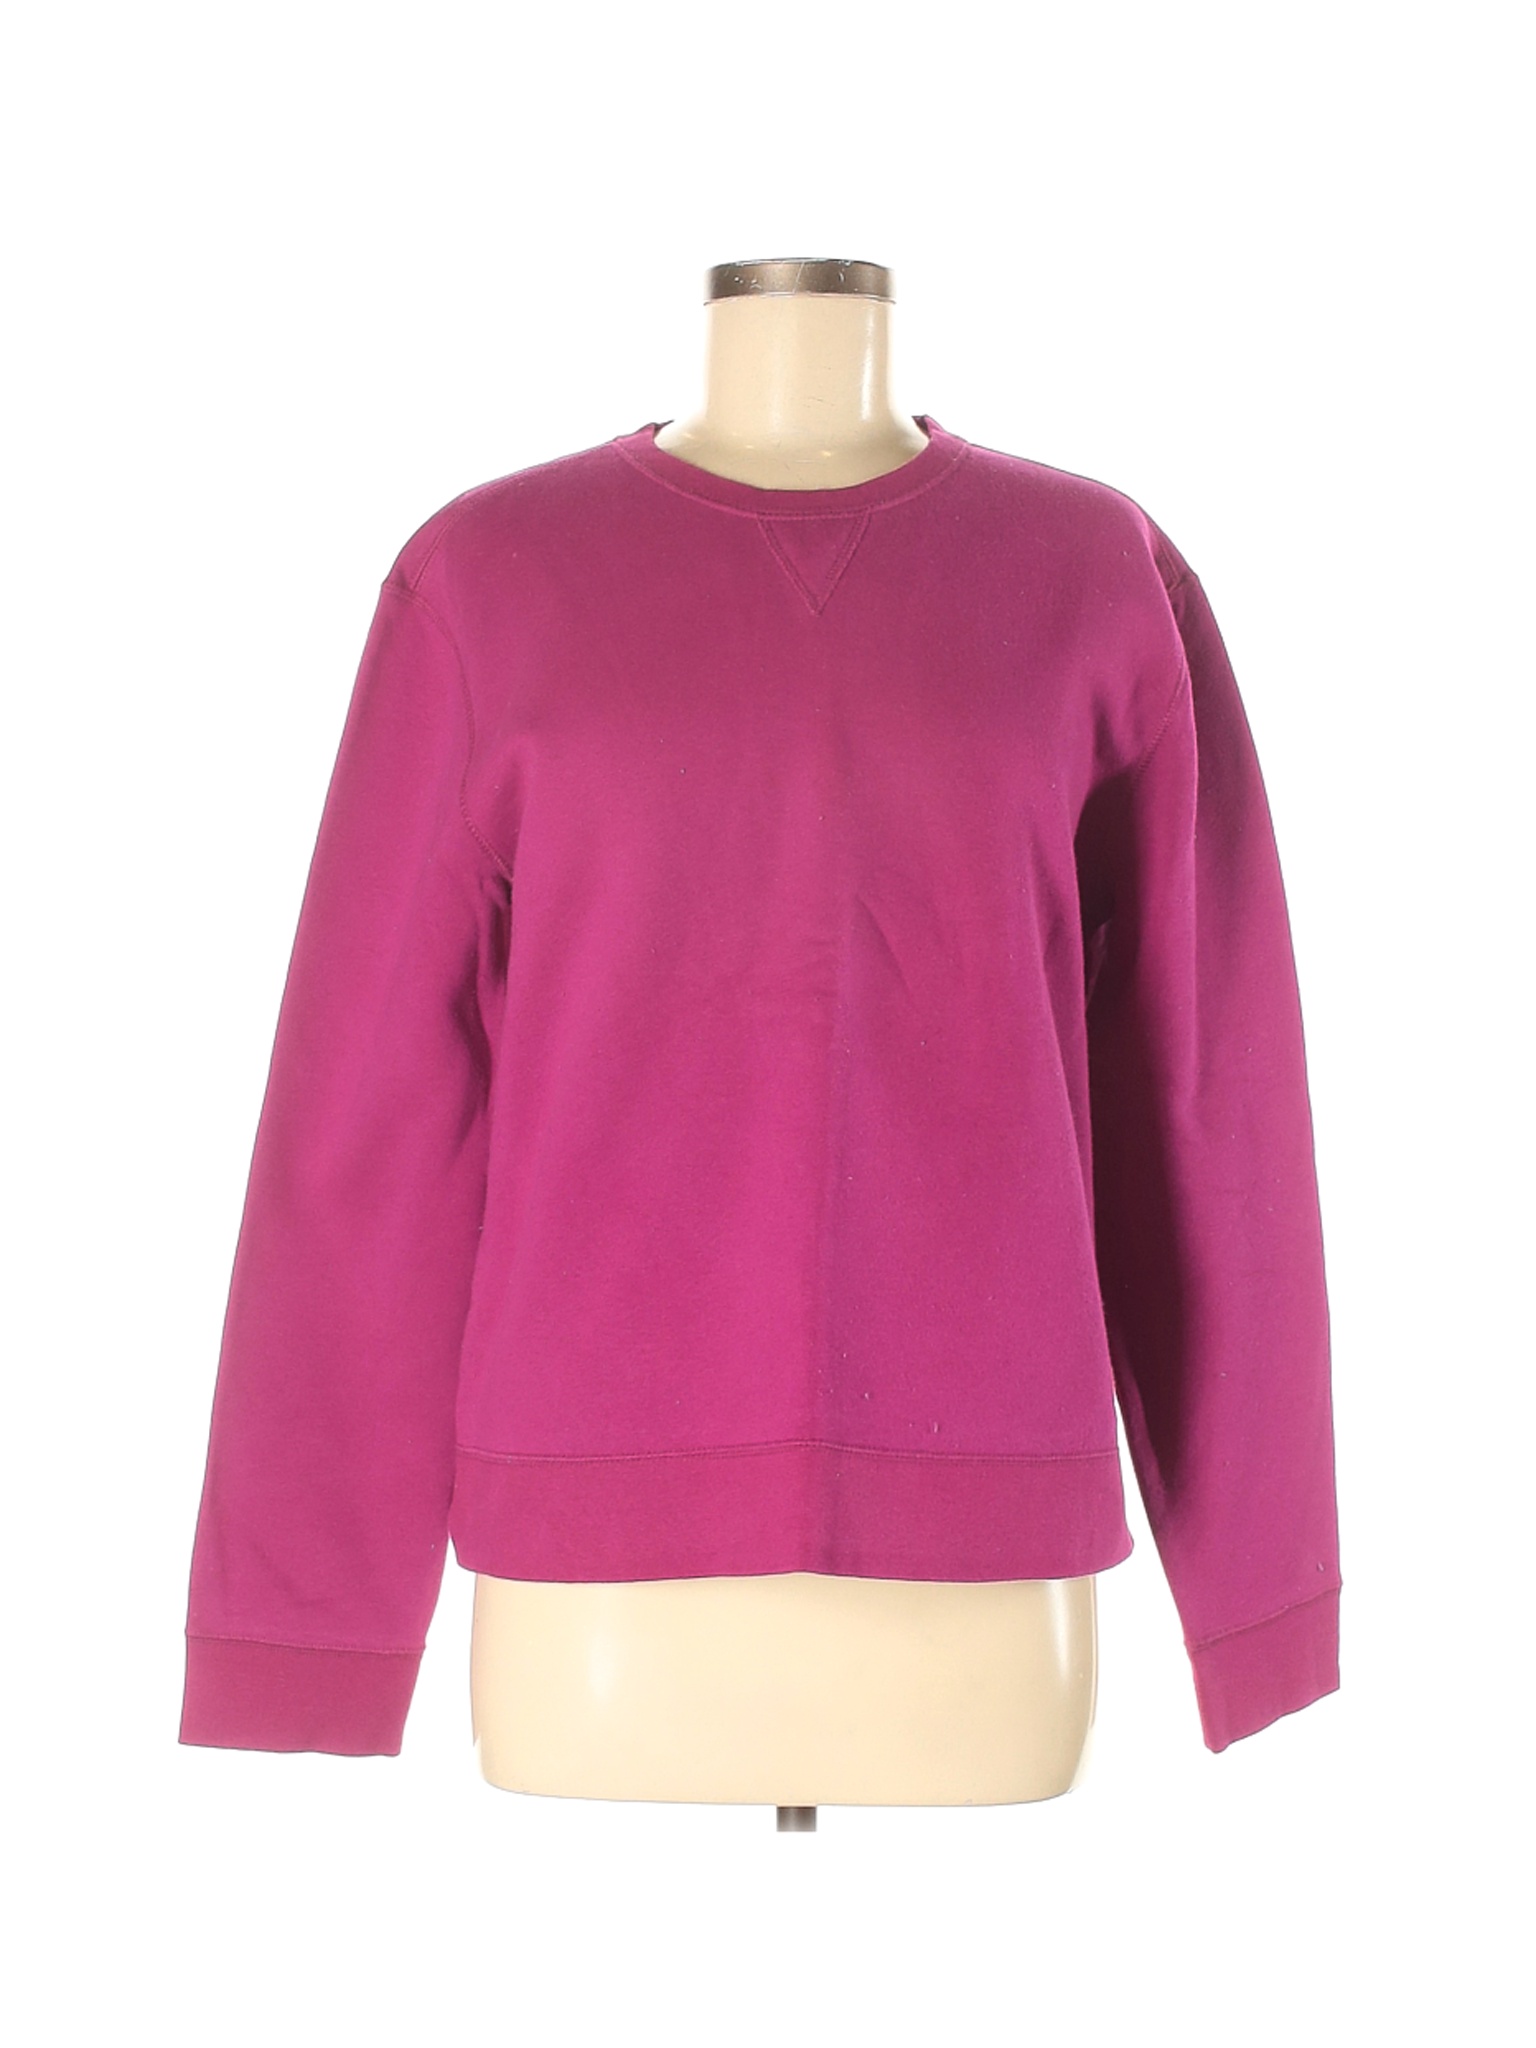 Joe Boxer Women Pink Sweatshirt M | eBay